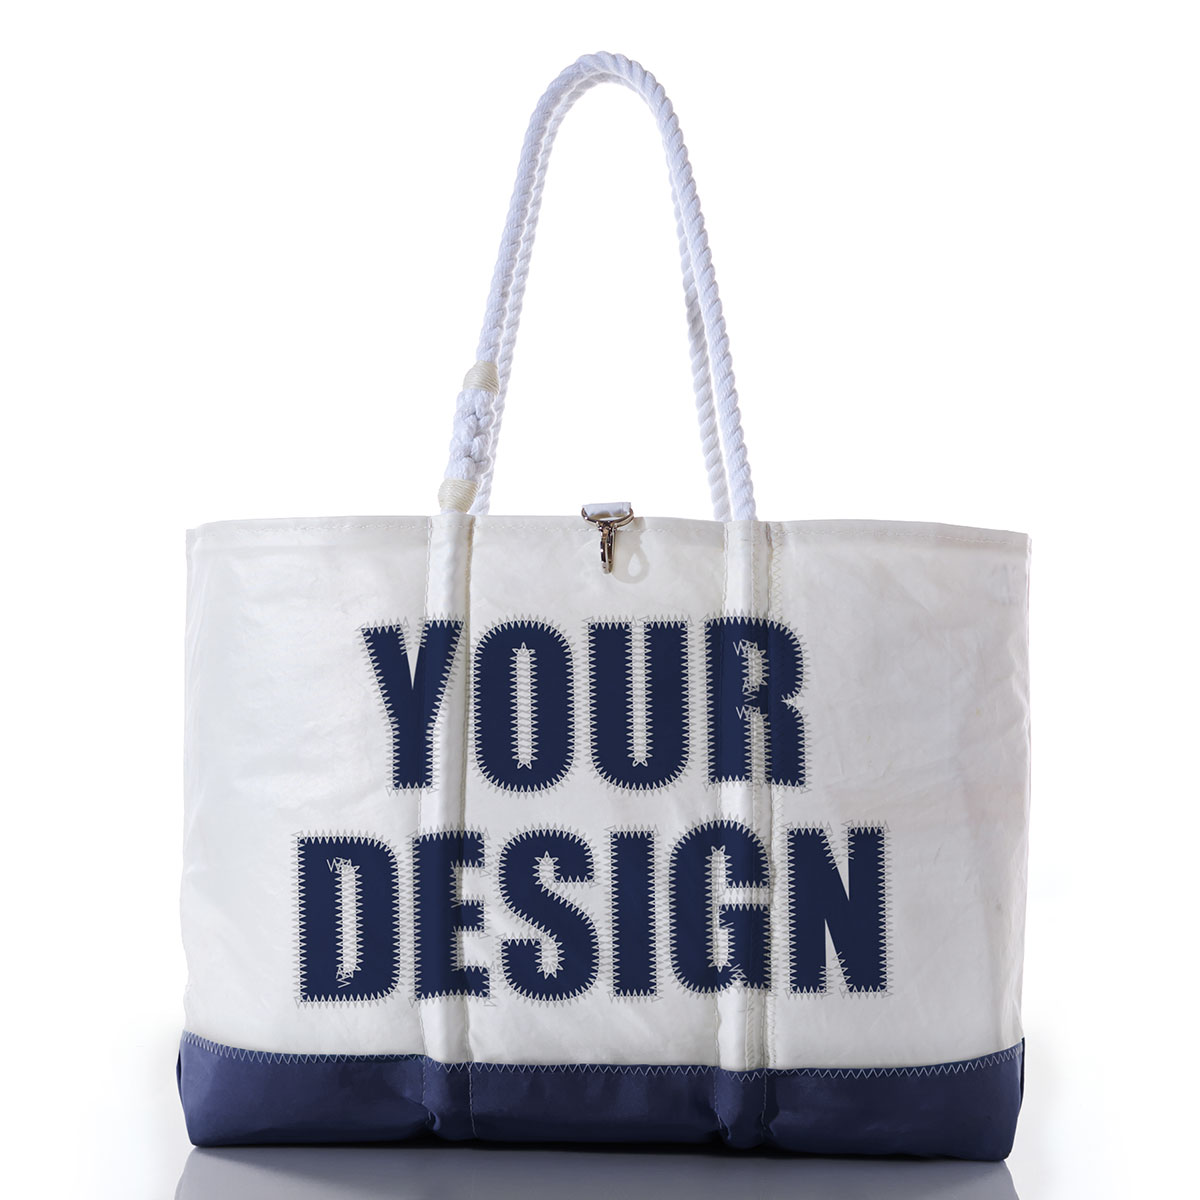 Cotton tote bag Handmade TOTE BAG Shopping Bag Geese design Fish design Coastal theme.